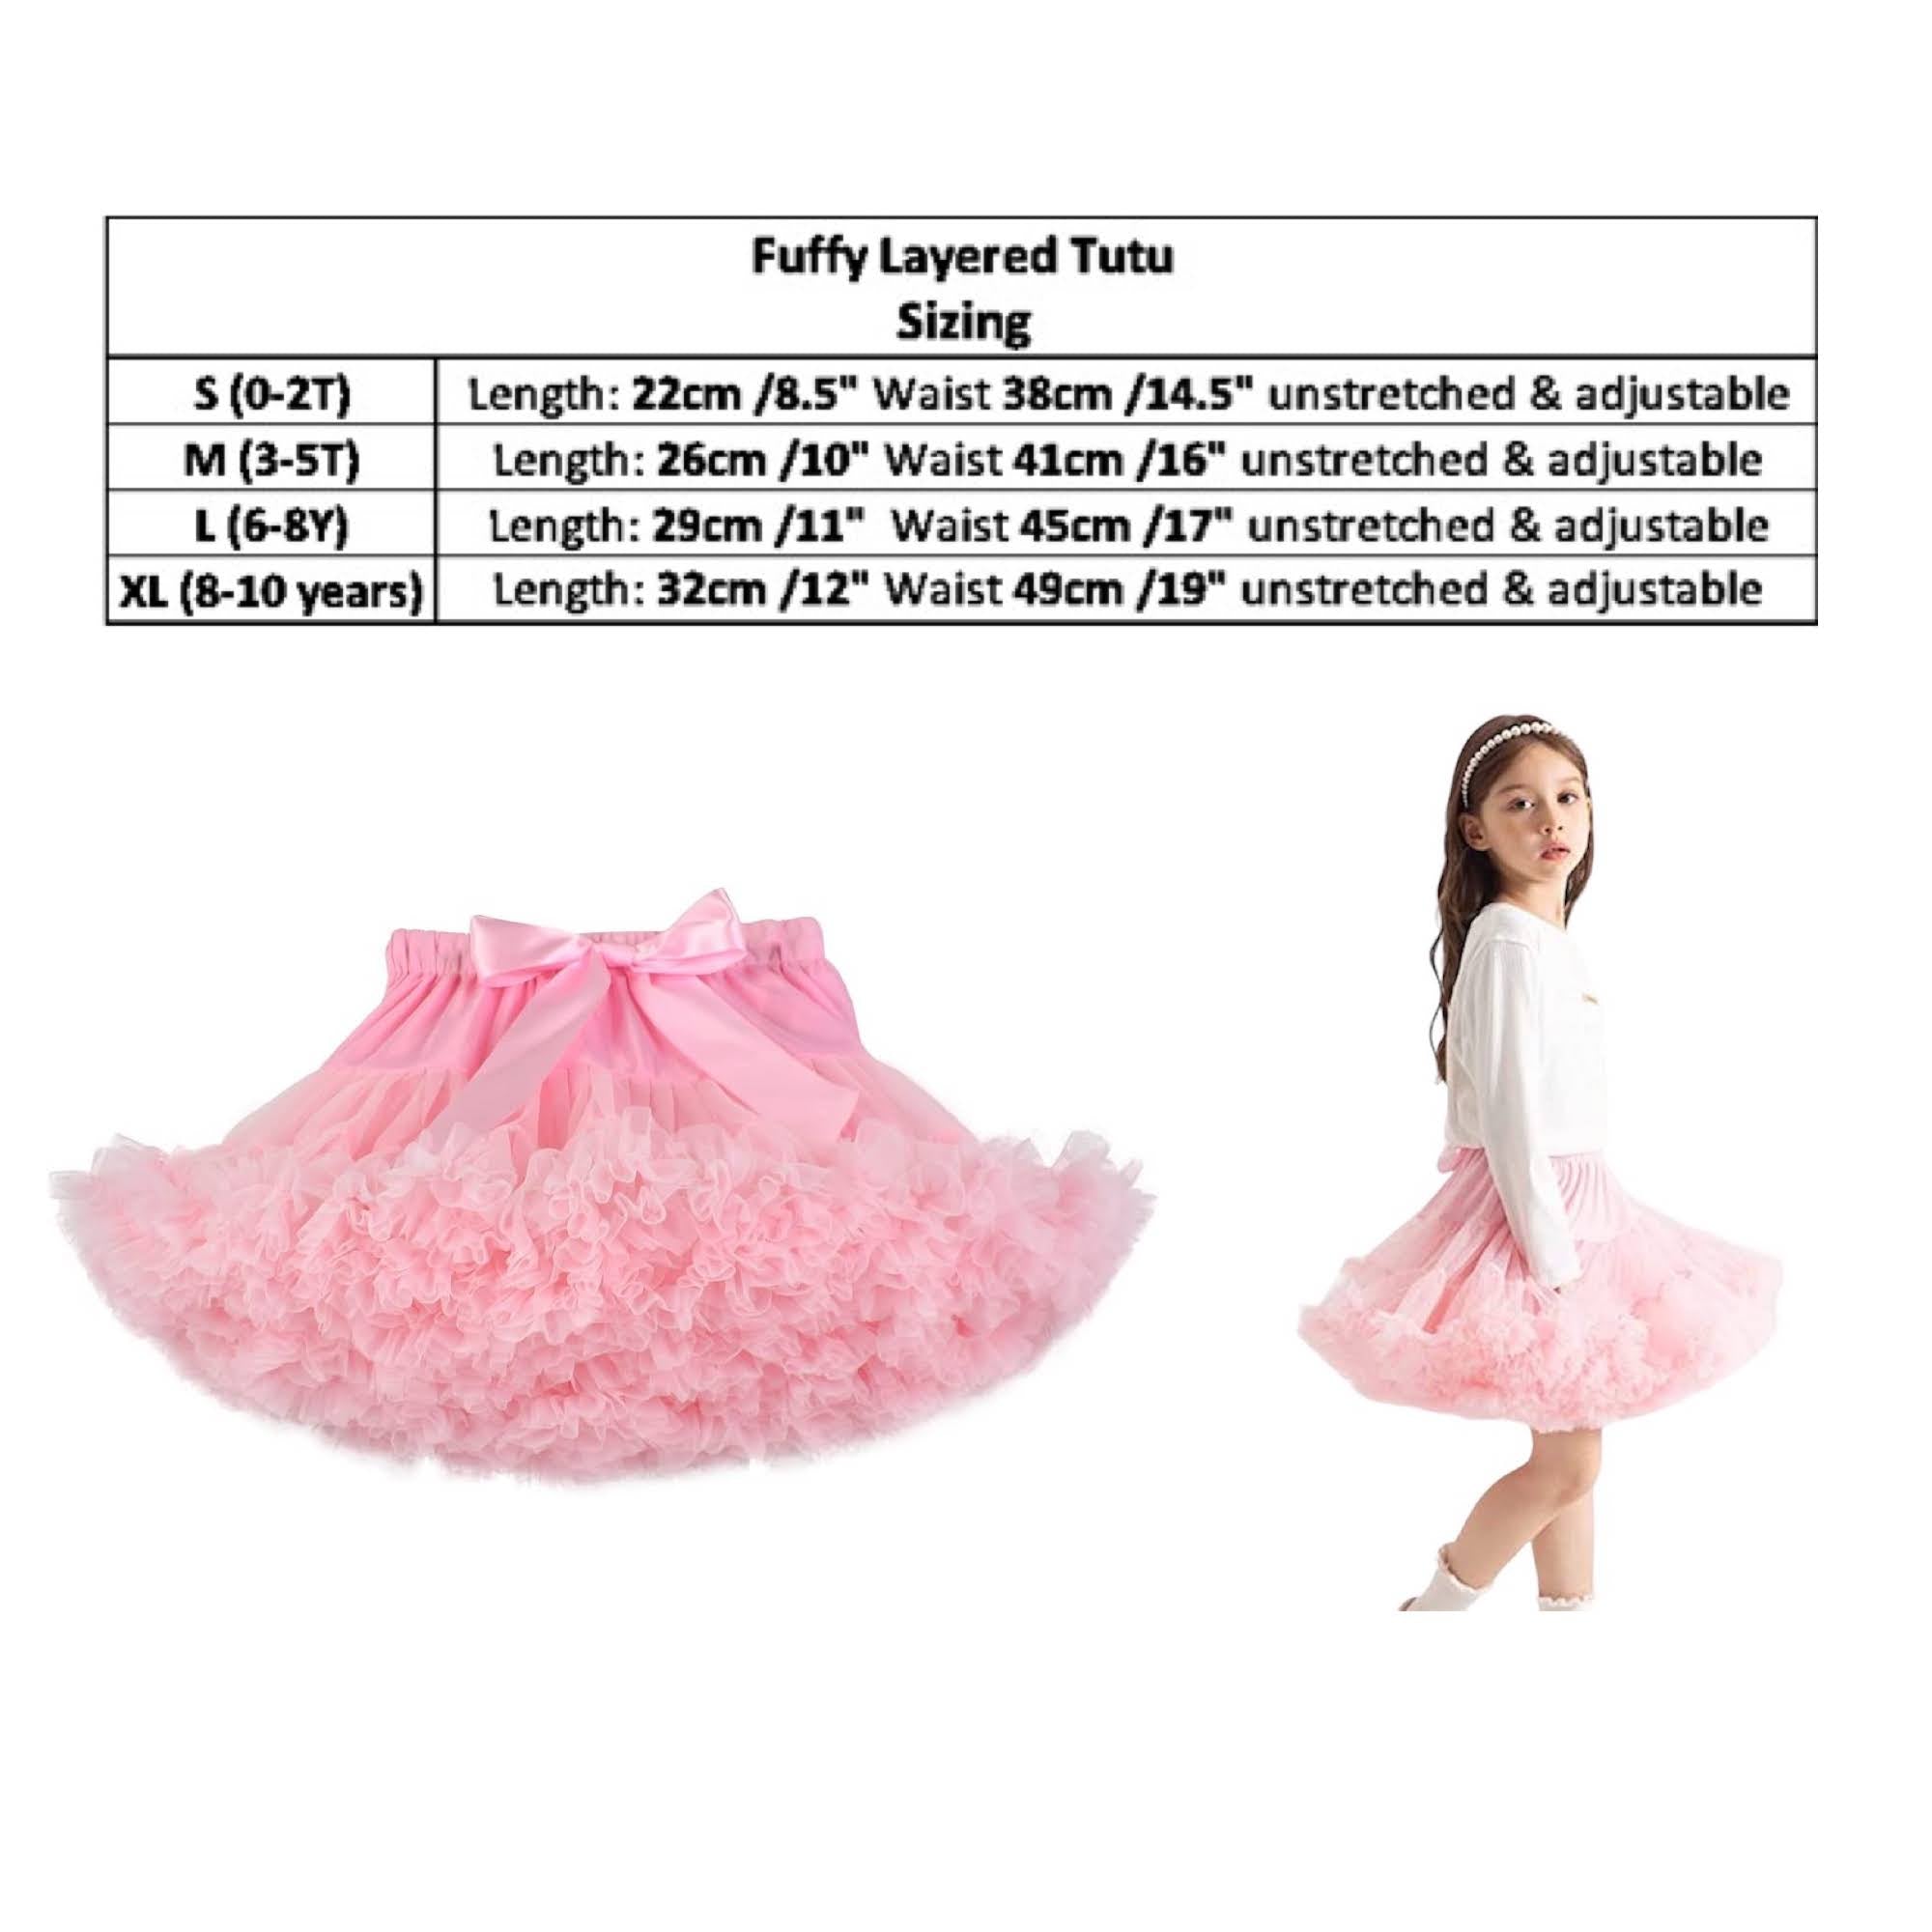 fluffy layered tutu skirt for girls in pink, sizing, Tutu Joli size